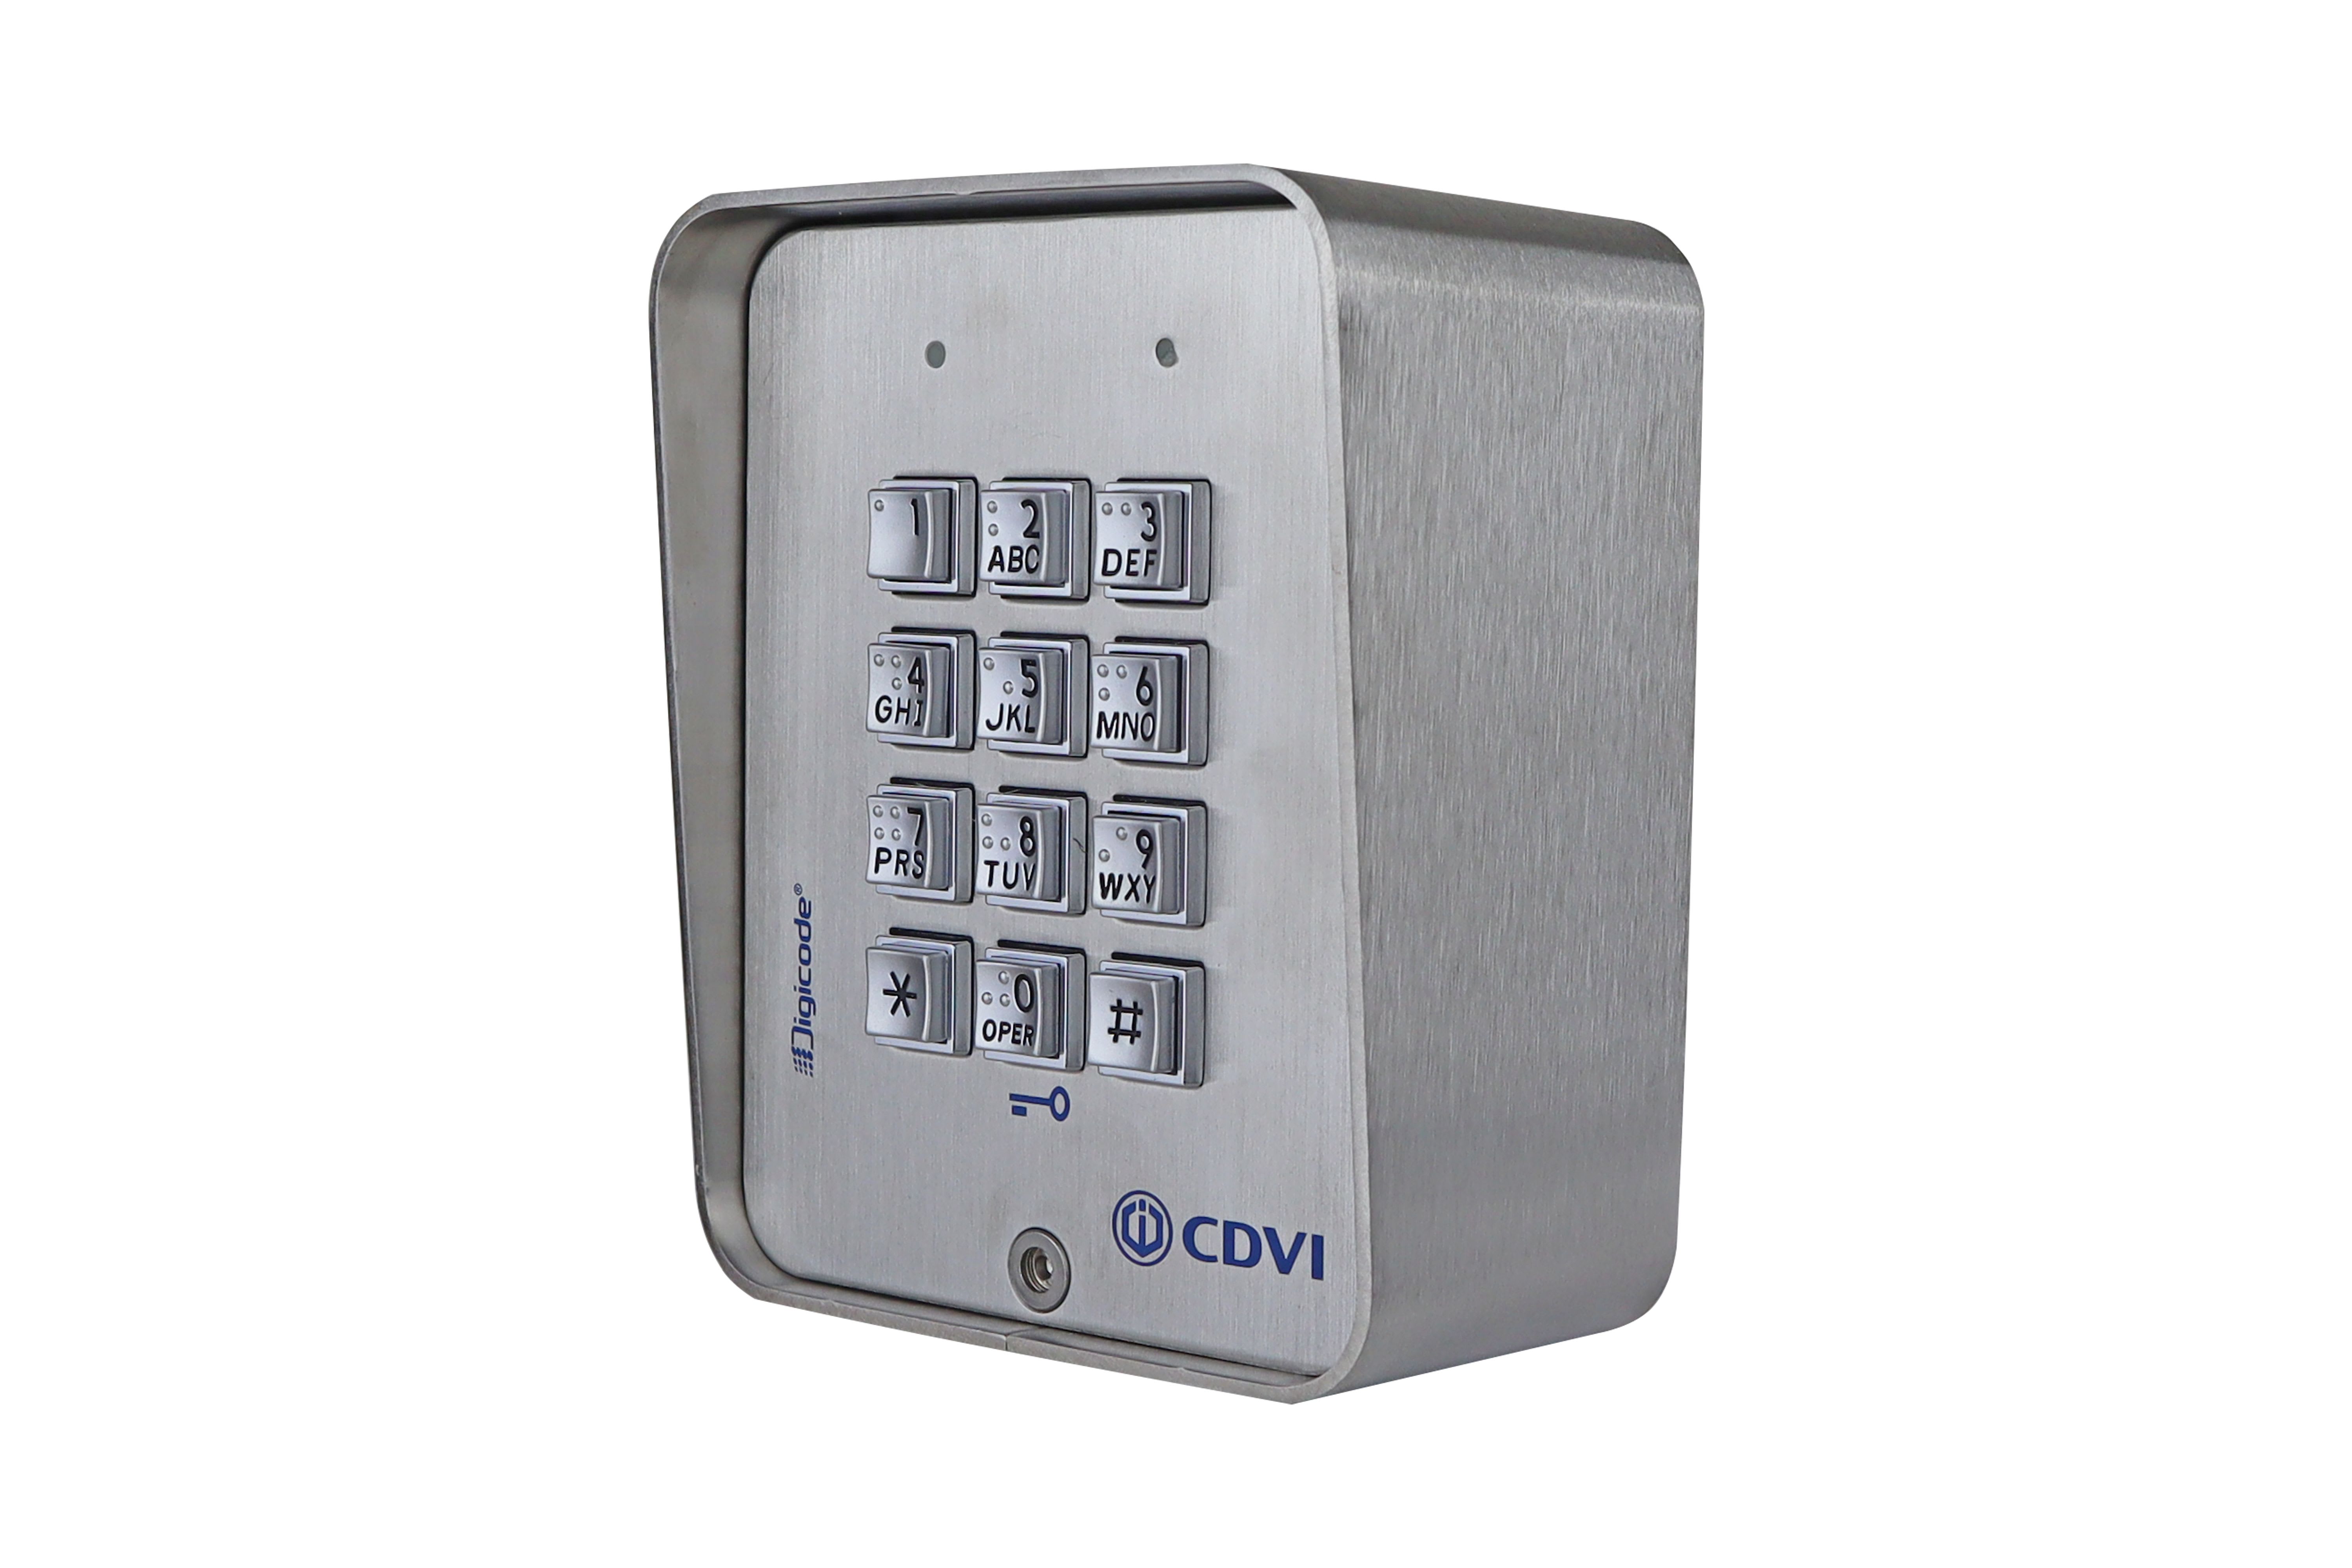 Cdvi - Clavier code Digicode inox touches en braille - 3 relais